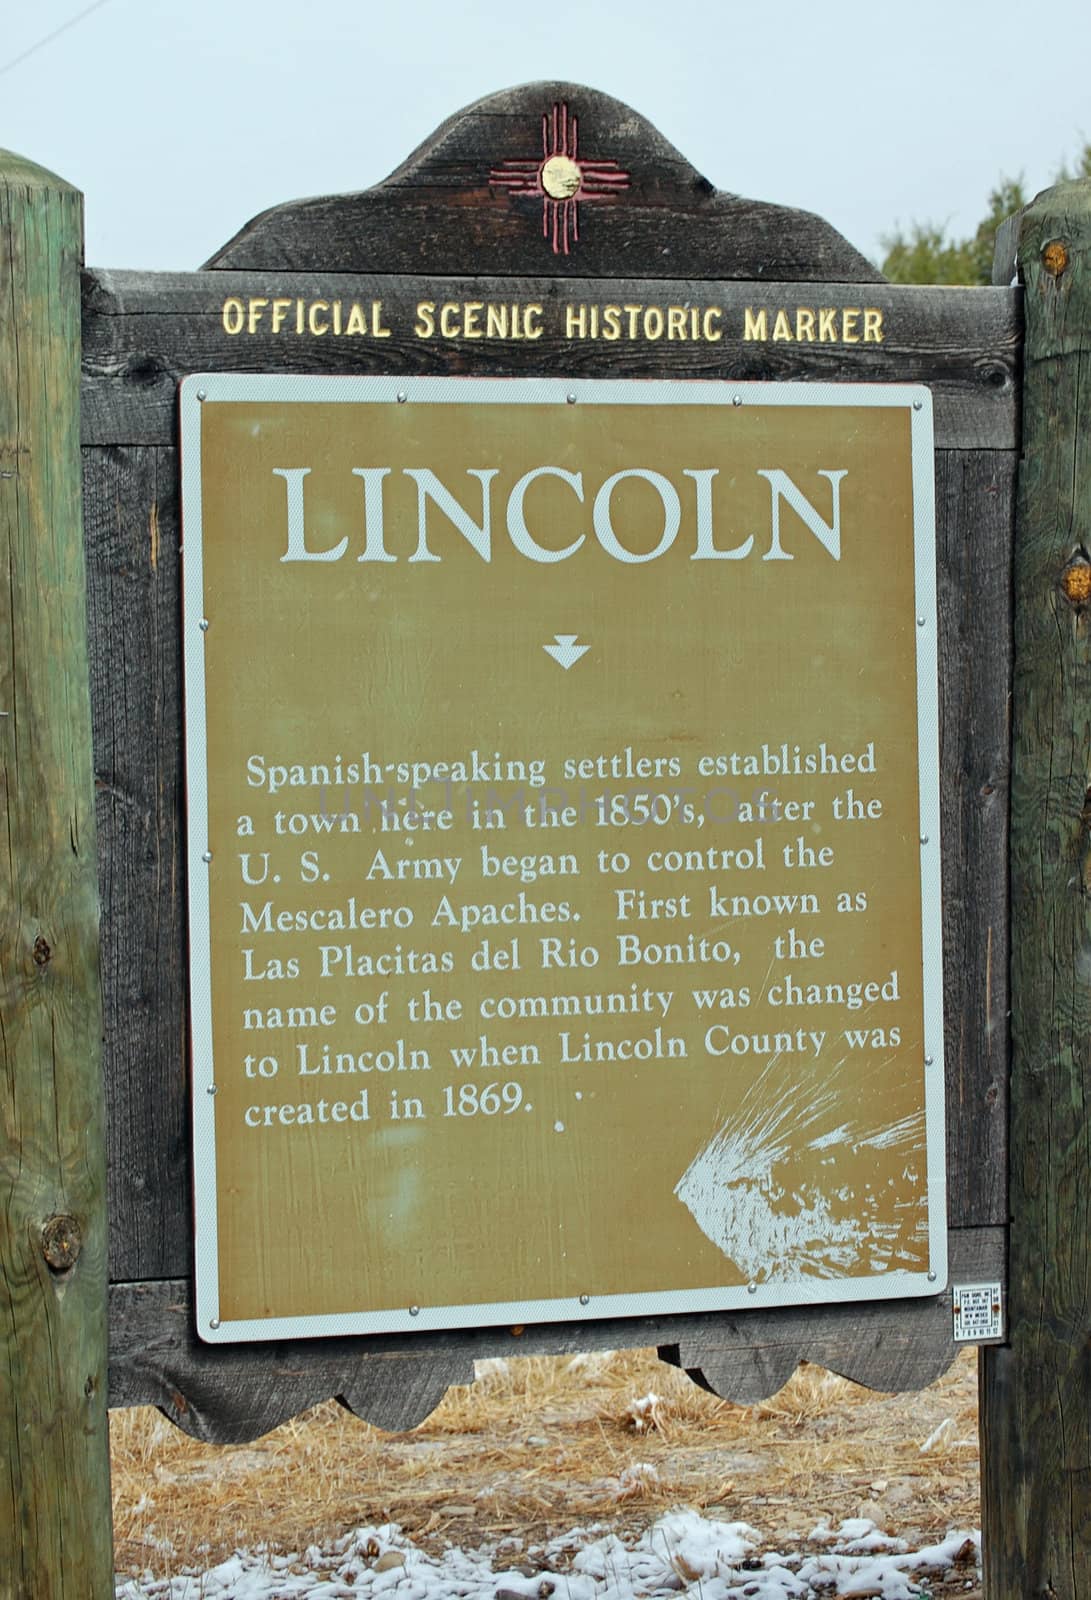 Lincoln New Mexico Official Scenic Historic Marker